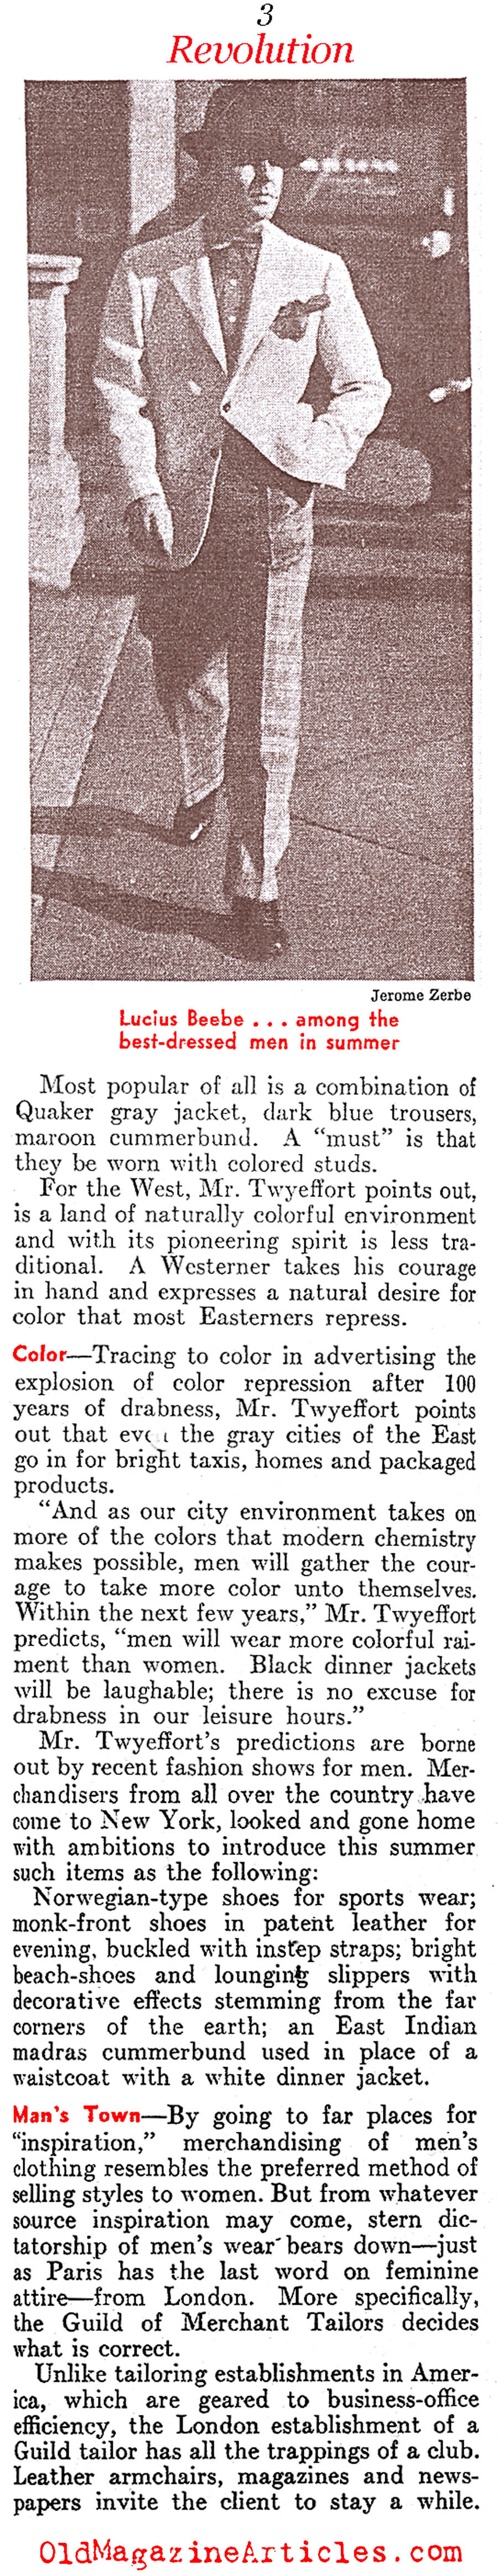 Colorful Menswear (Literary Digest, 1937)